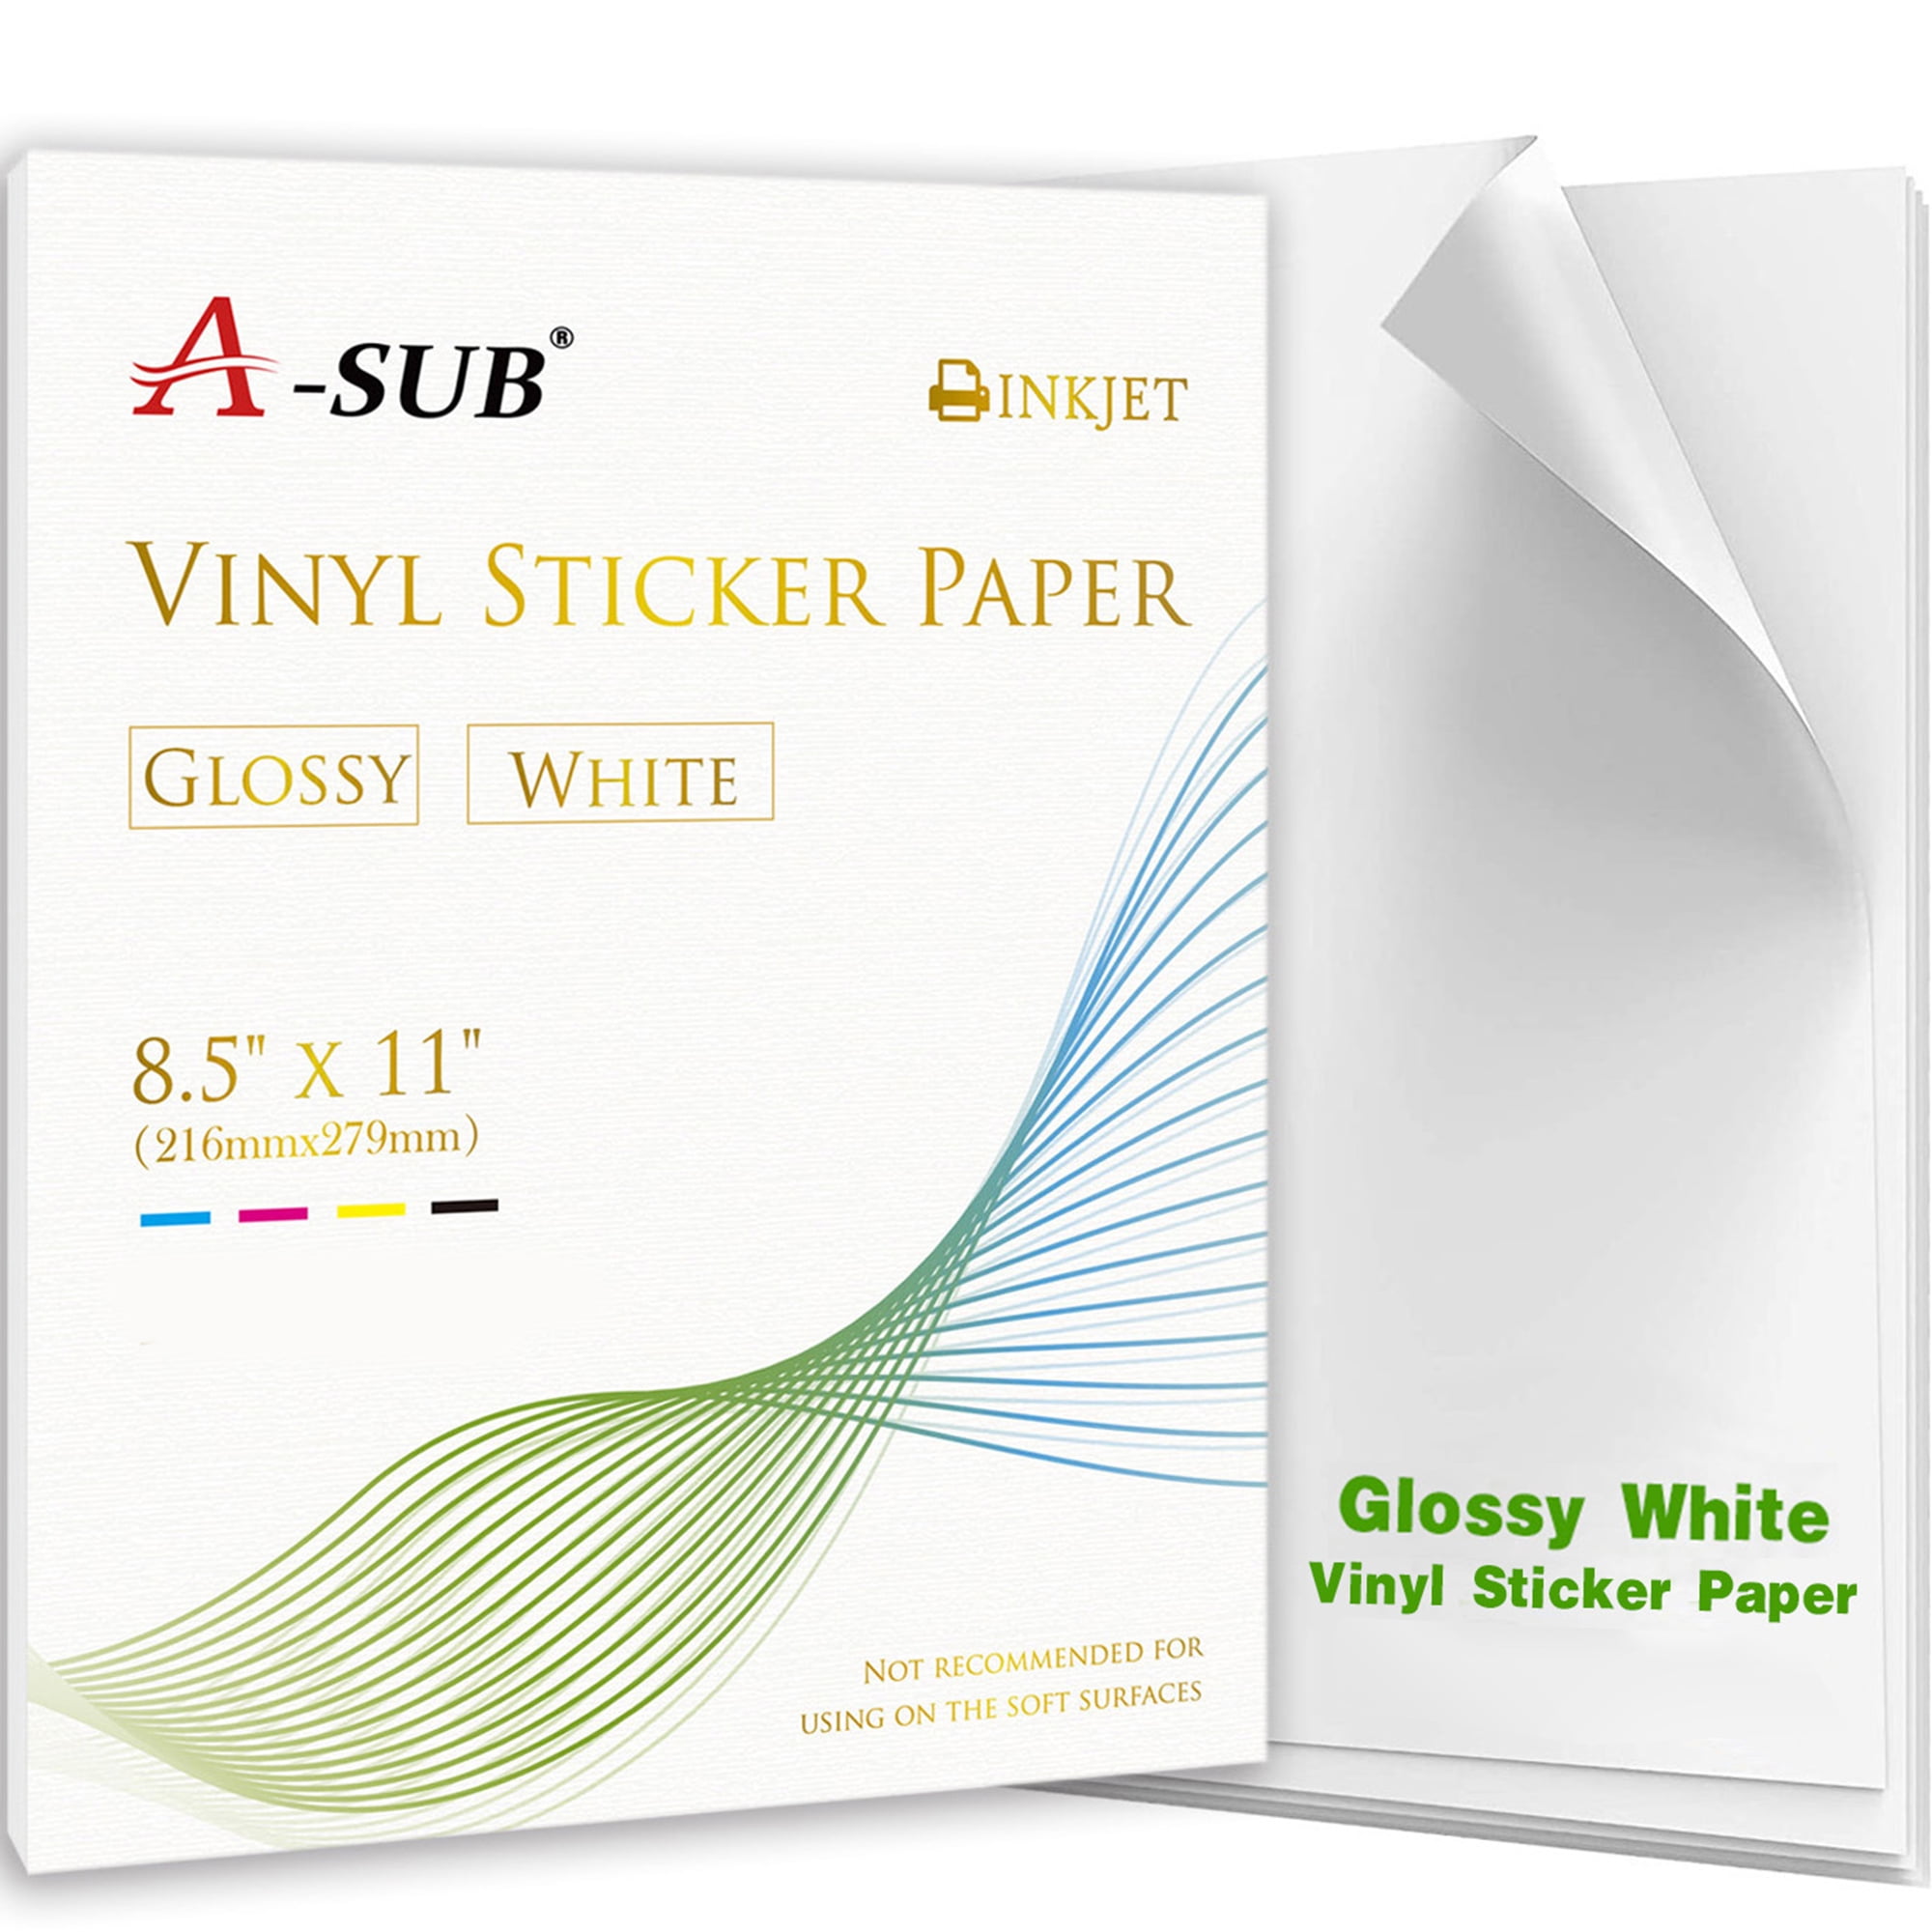 Heat Transfer Paper for Laser Printer -Dark fabrics A3 50 Sheets (No-Cut) A  & B